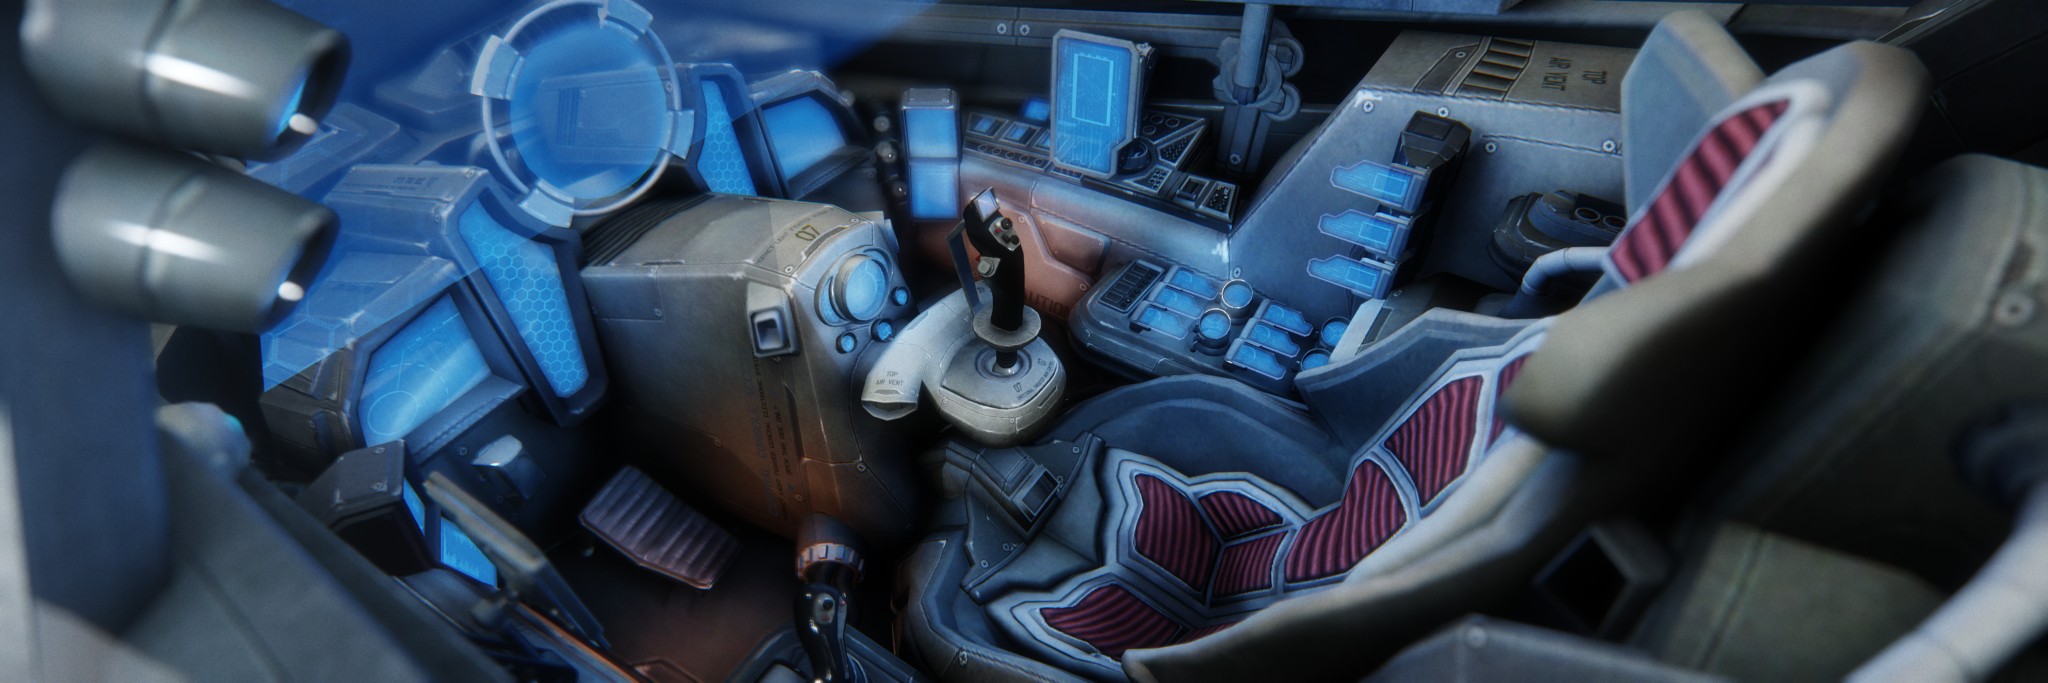 Datei:F7C-M Super Hornet cockpit visual.jpg